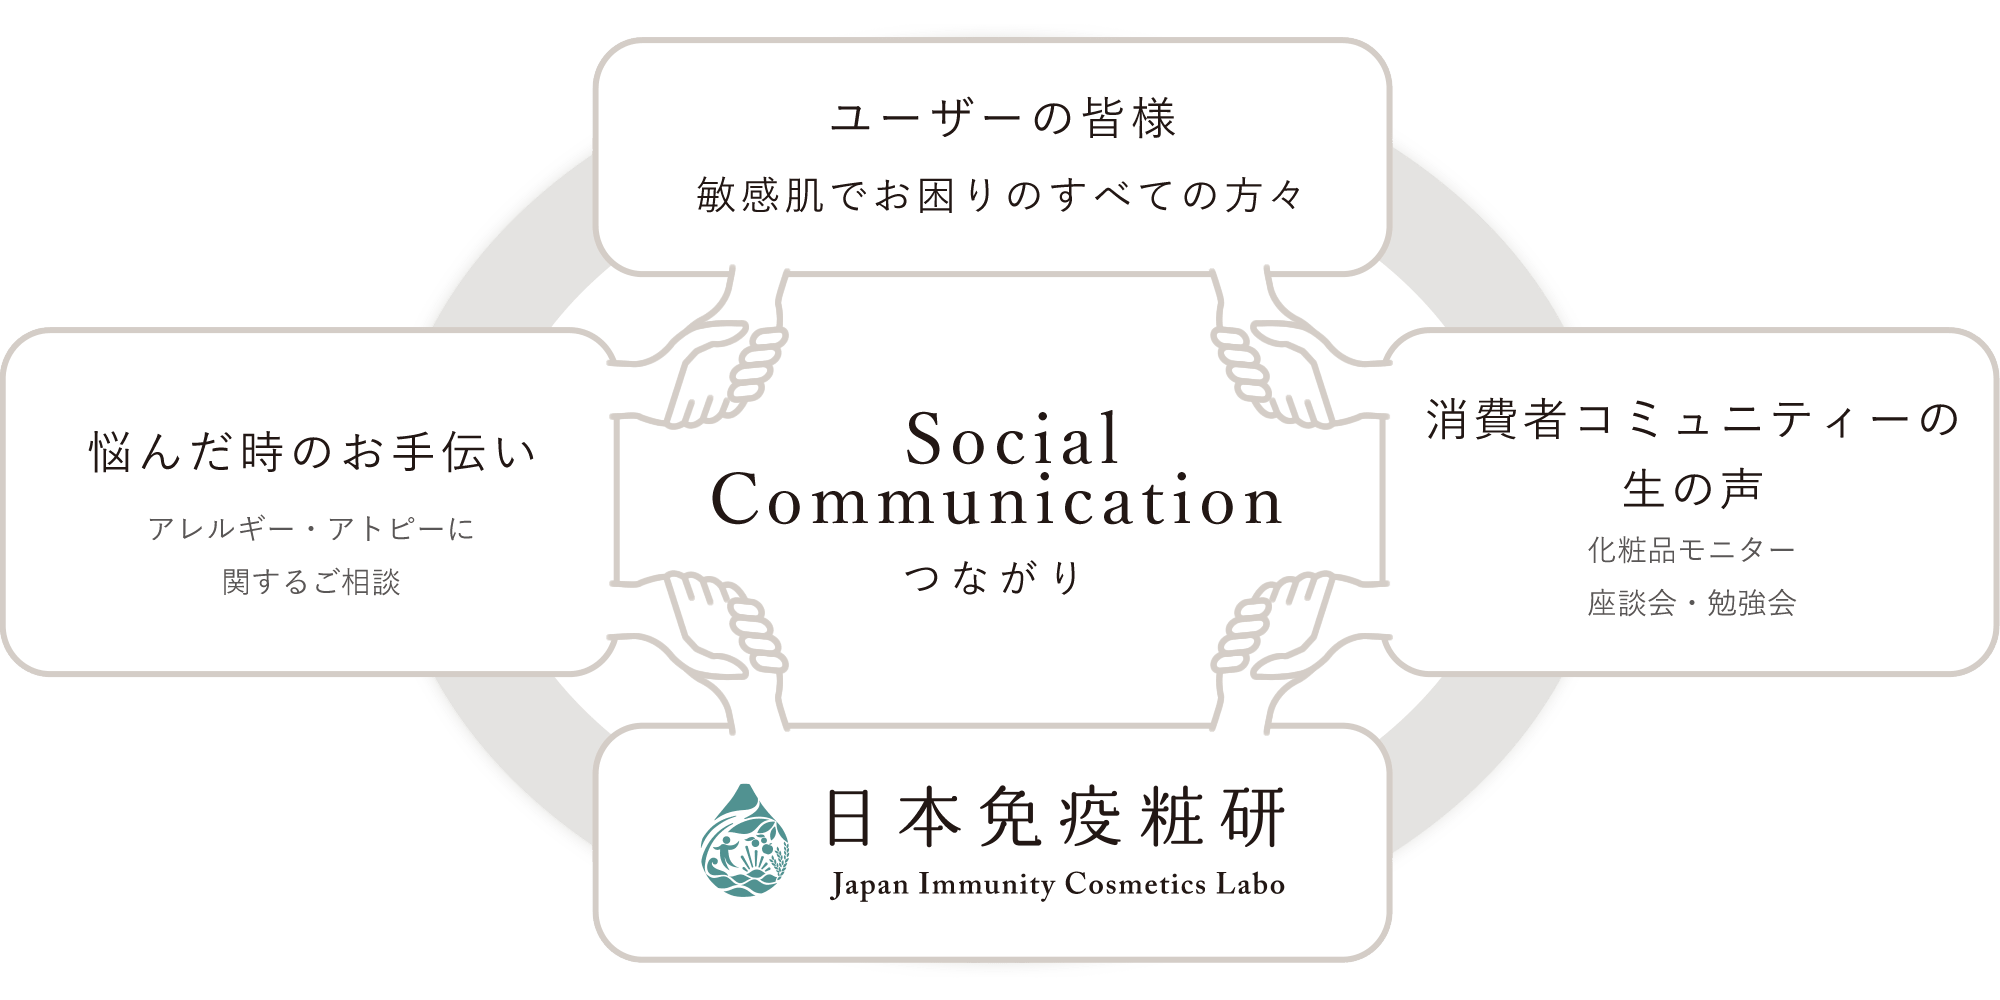 Social Communication / つながり